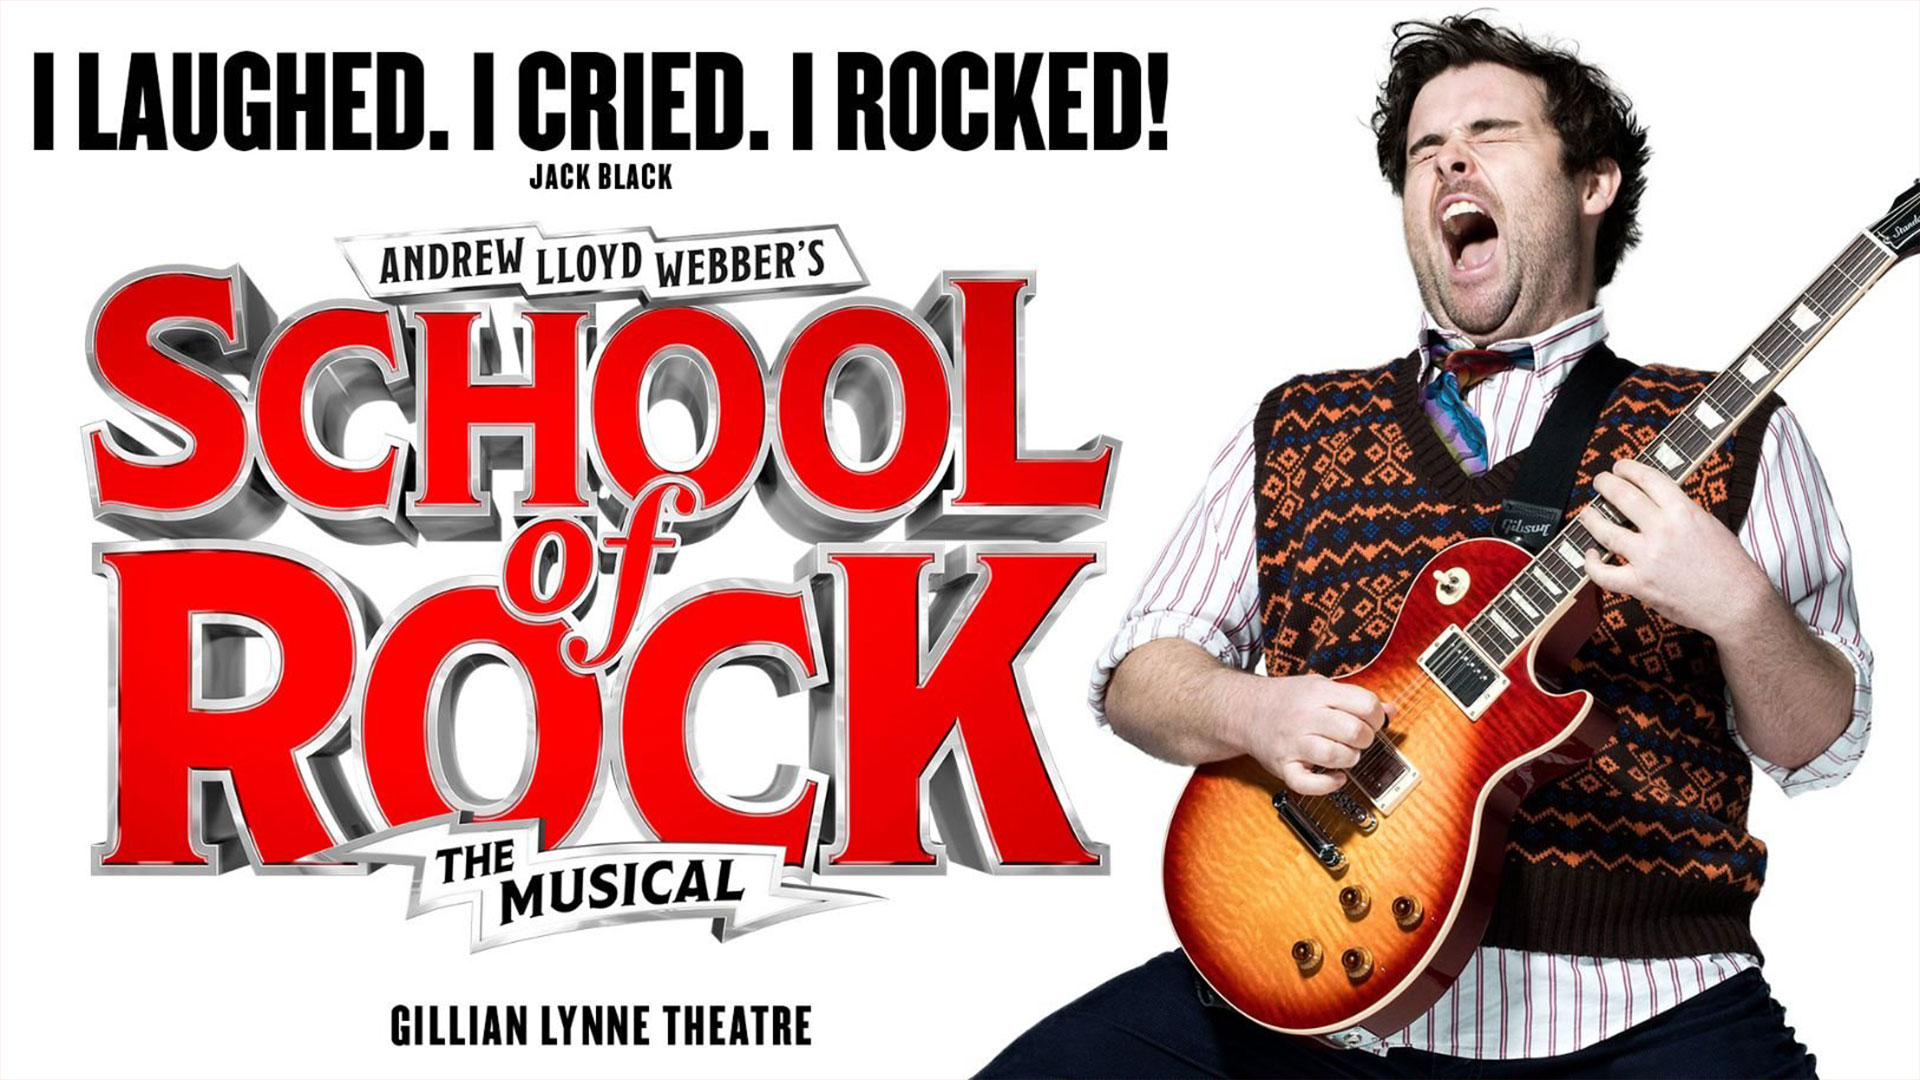 I LAUGHED. I CRIED. I ROCKED! - Jack Black Andrew Lloyd Webber's SCHOOL OF ROCK THE MUSICAL Gillian Lynne Theatre